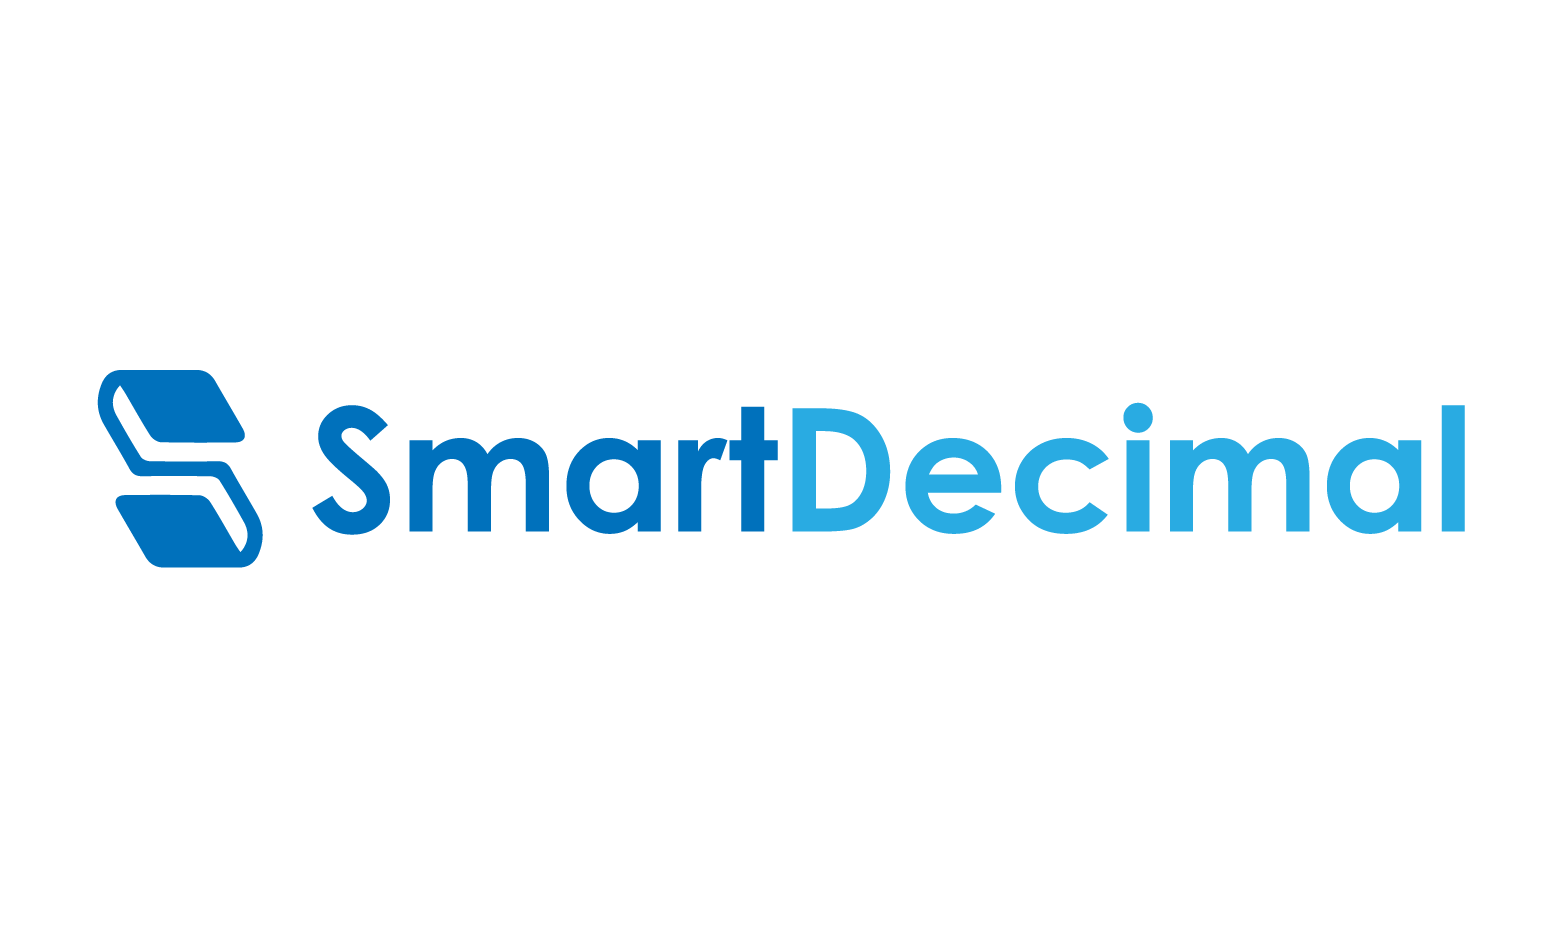 SmartDecimal.com - Creative brandable domain for sale